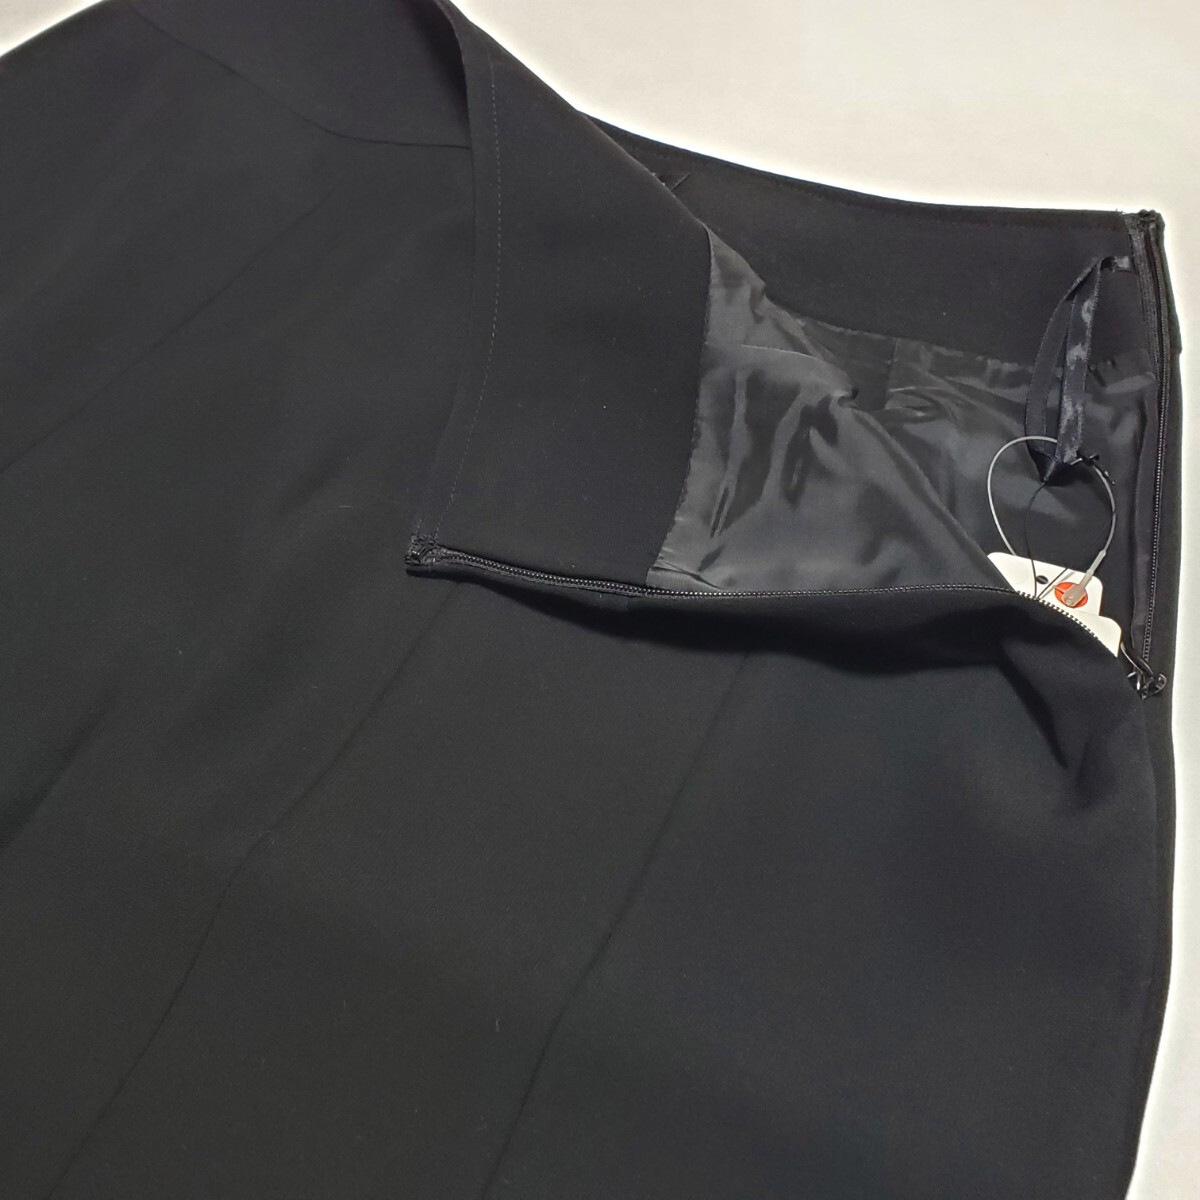 hiromichi nakano ヒロミチナカノ スカート ブラック サイズ9 タグ付き未使用品の画像7